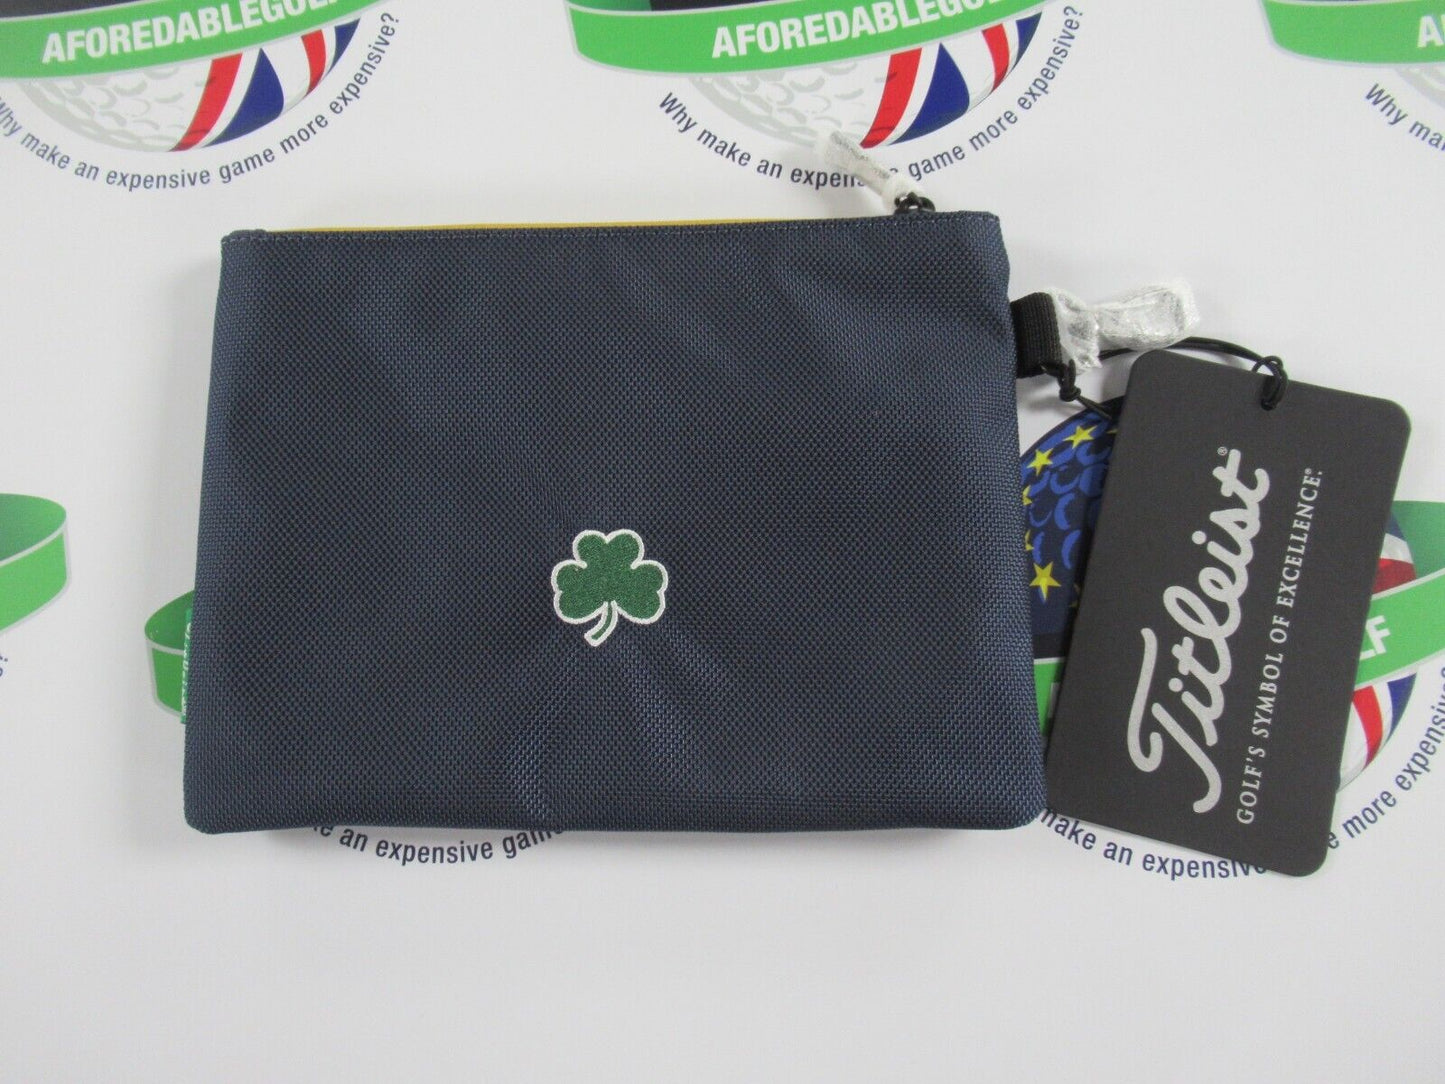 titleist limited edition shamrock navy/green zippered pouch